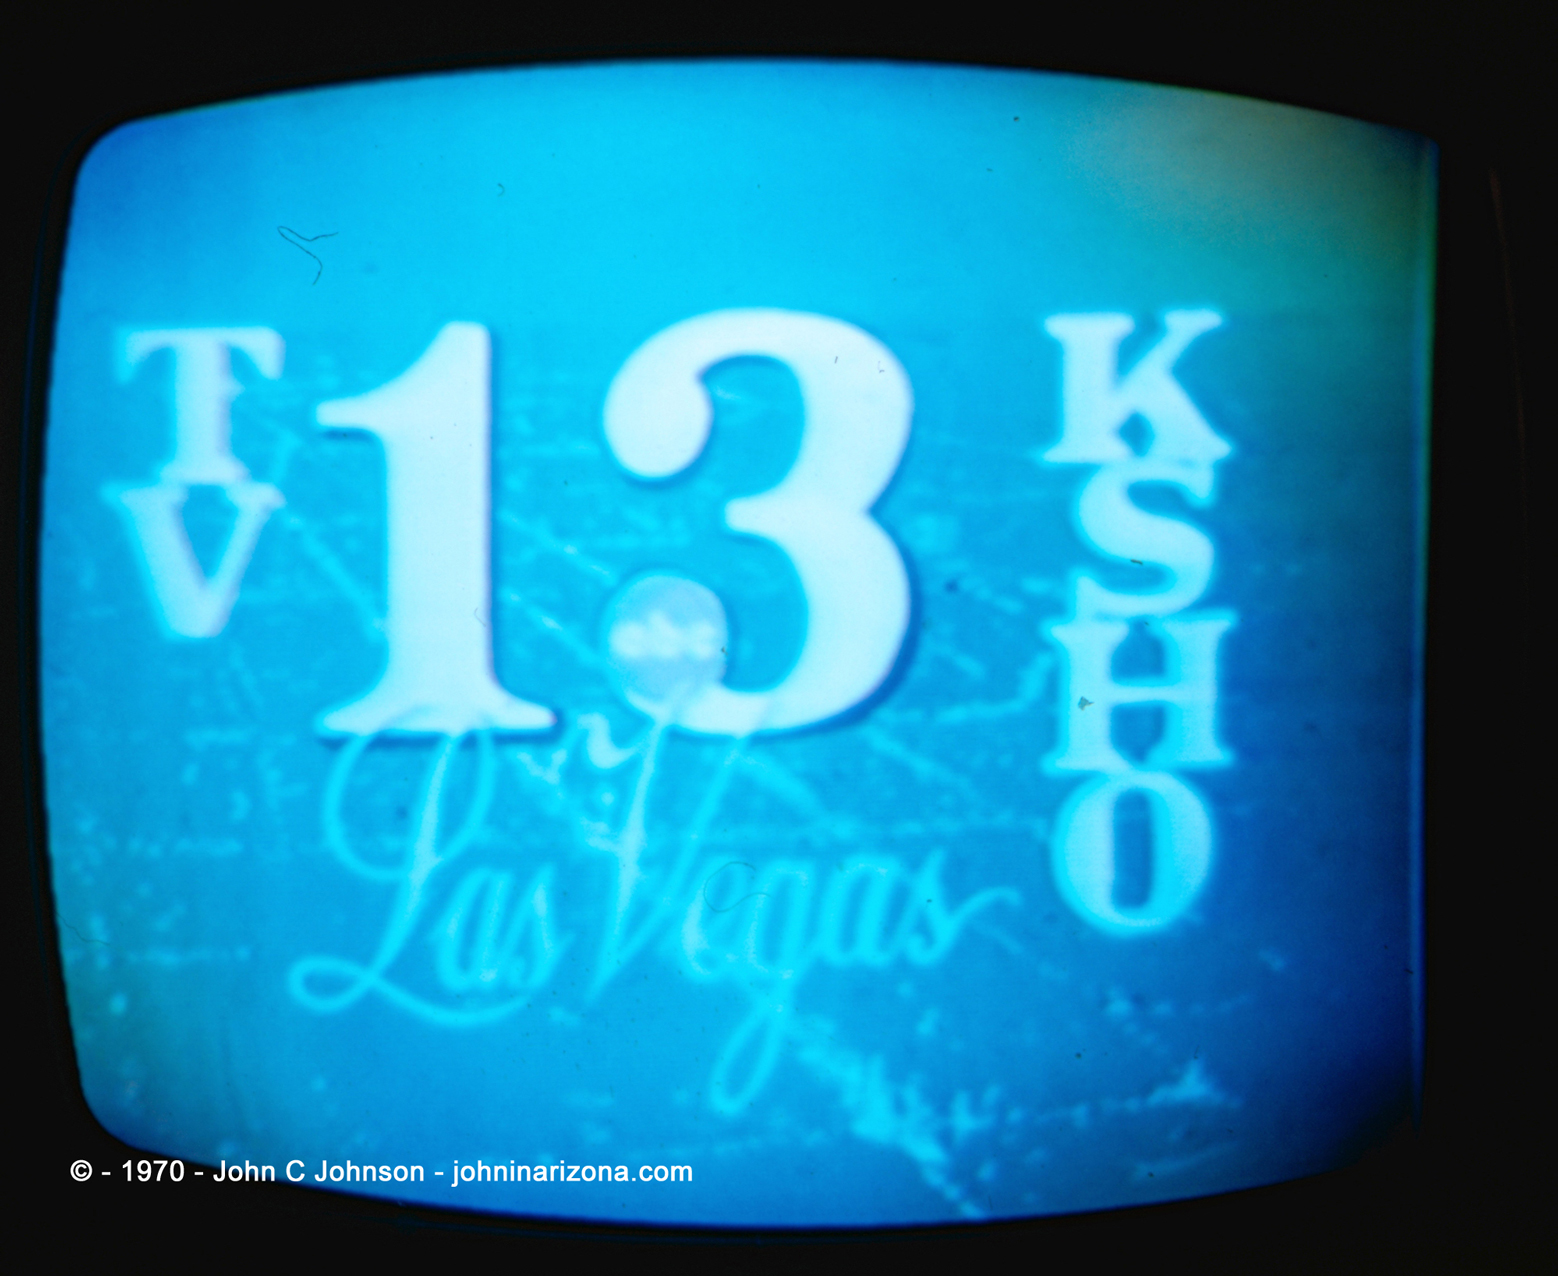 KSHO TV Channel 13 Las Vegas, Nevada